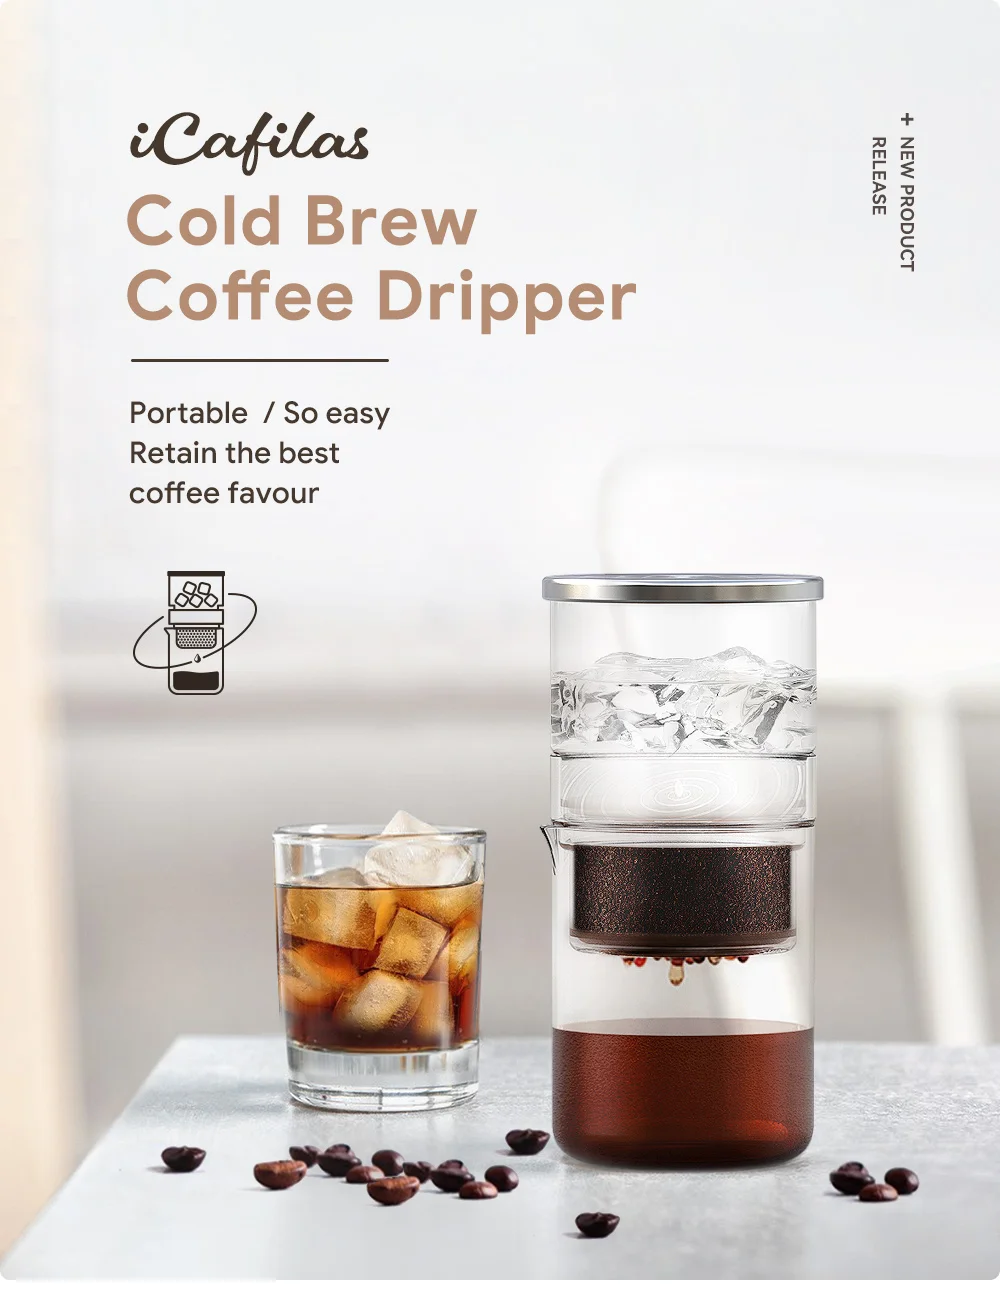 https://ae01.alicdn.com/kf/Sbbfa0033979d4949aa8d6d3acda6e90eK/Cold-Brew-Coffee-Pot-Set-Drip-Filter-Ecocoffee-Iced-Tools-Barista-Hand-made-Glass-Coffee-Maker.jpg